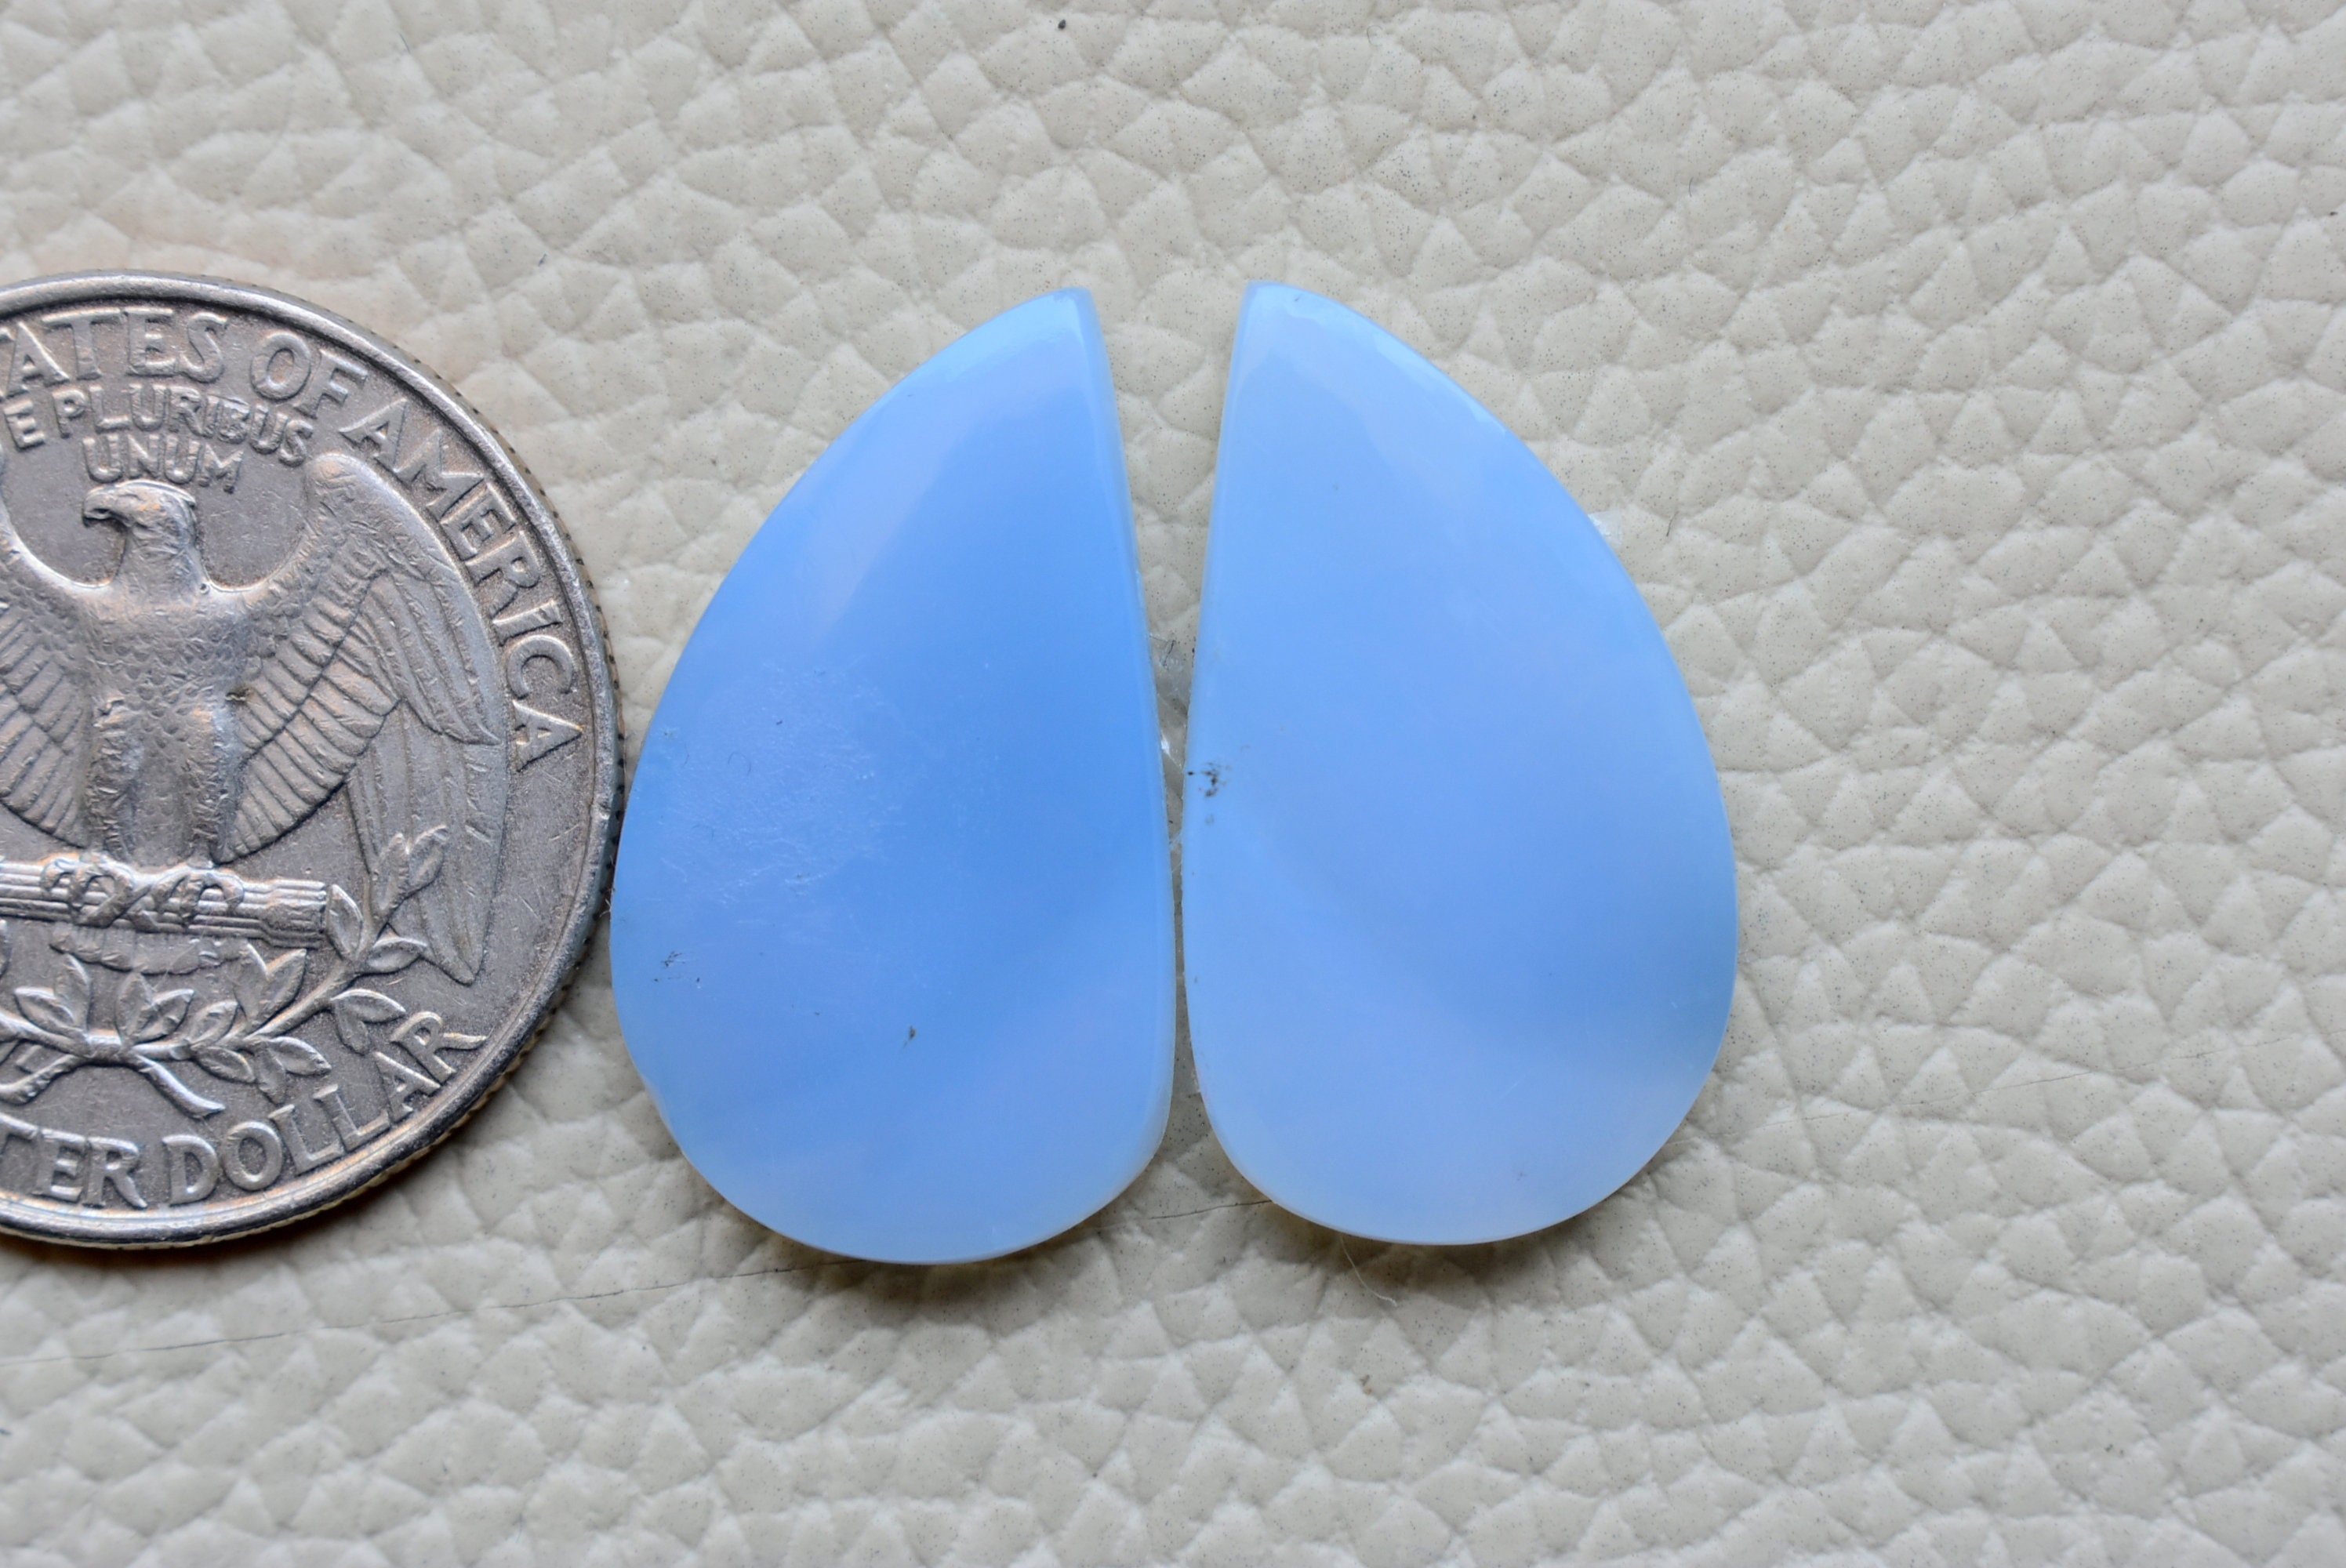 Matched pair loose semi precious cabochon Gemstone pair #9963 19x14x4 Natural Blue Opal Pair